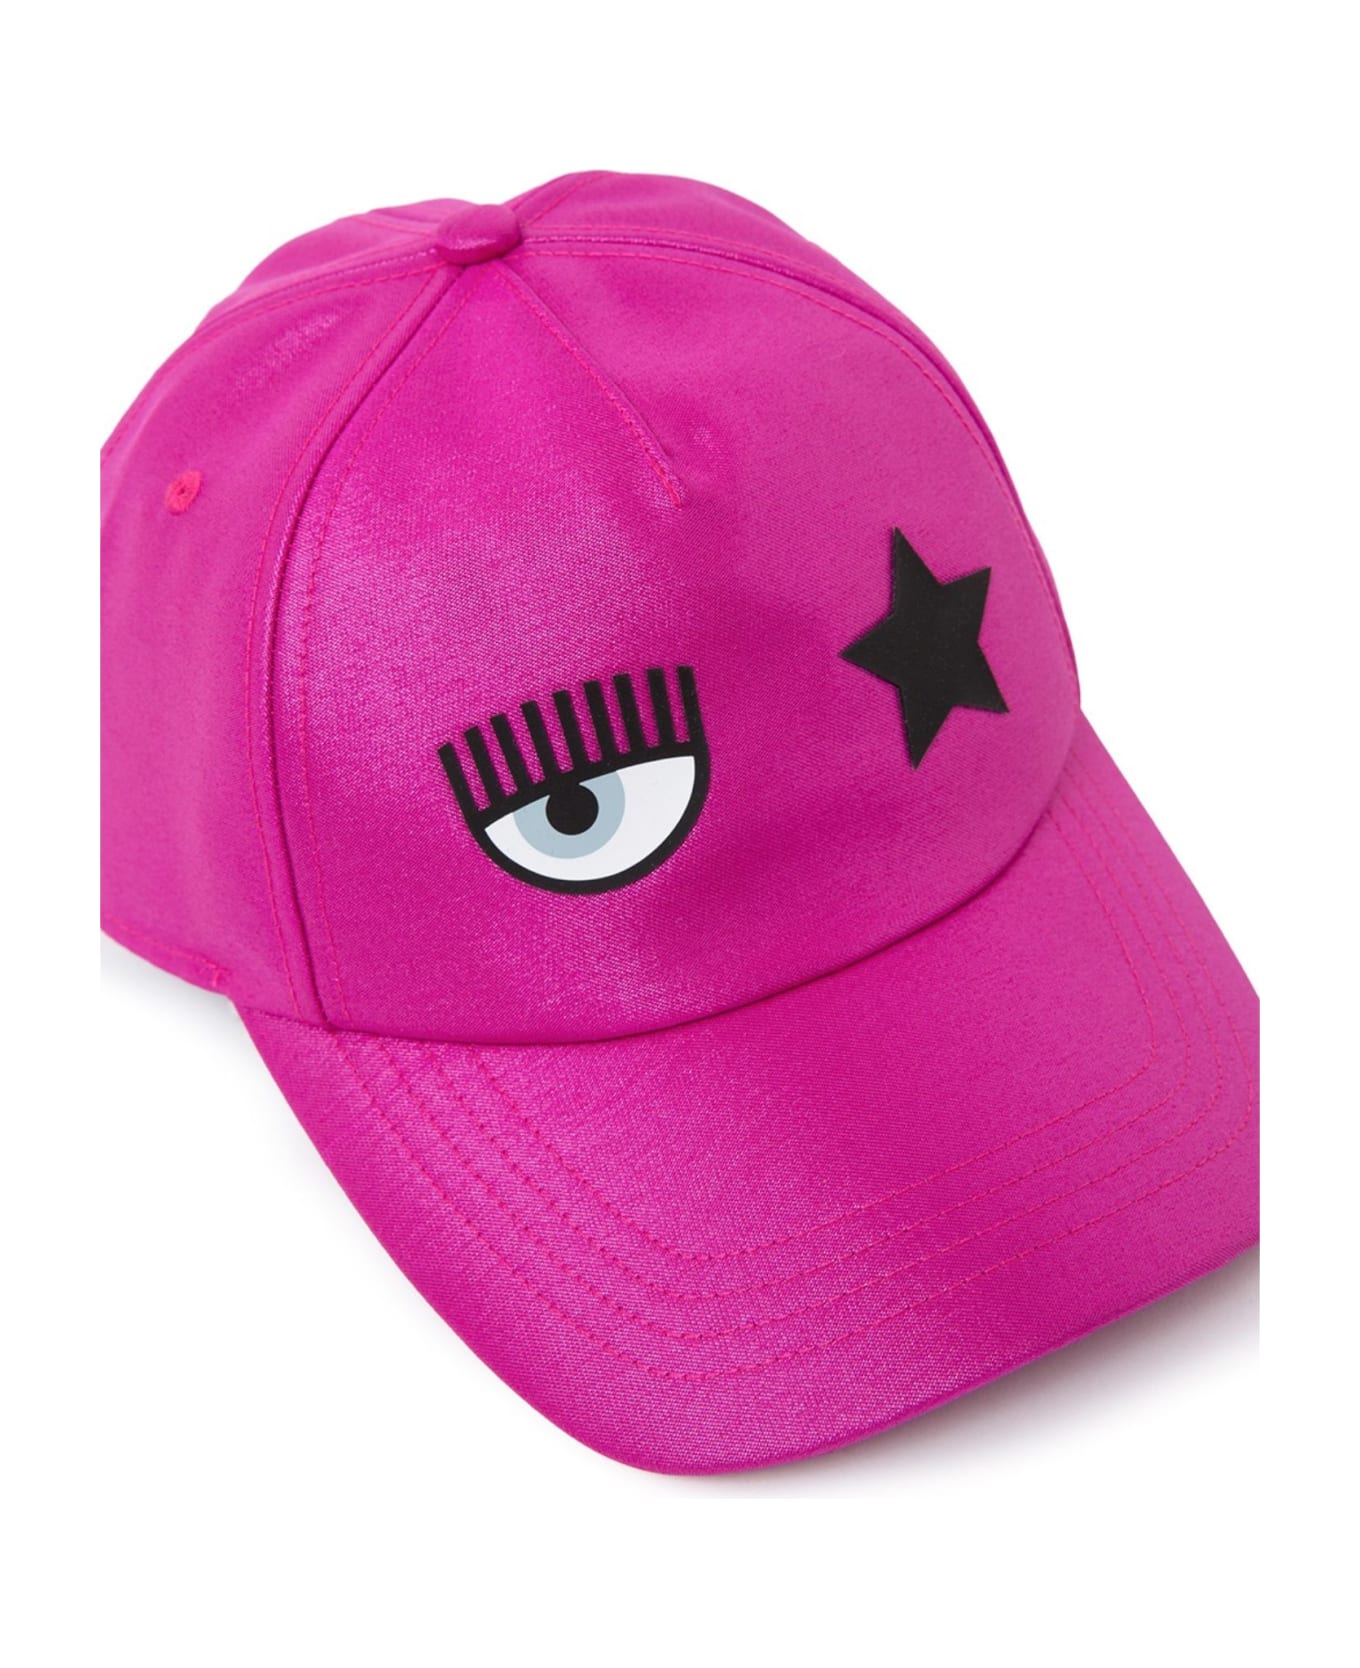 Chiara Ferragni Women's Hat - Pink 帽子